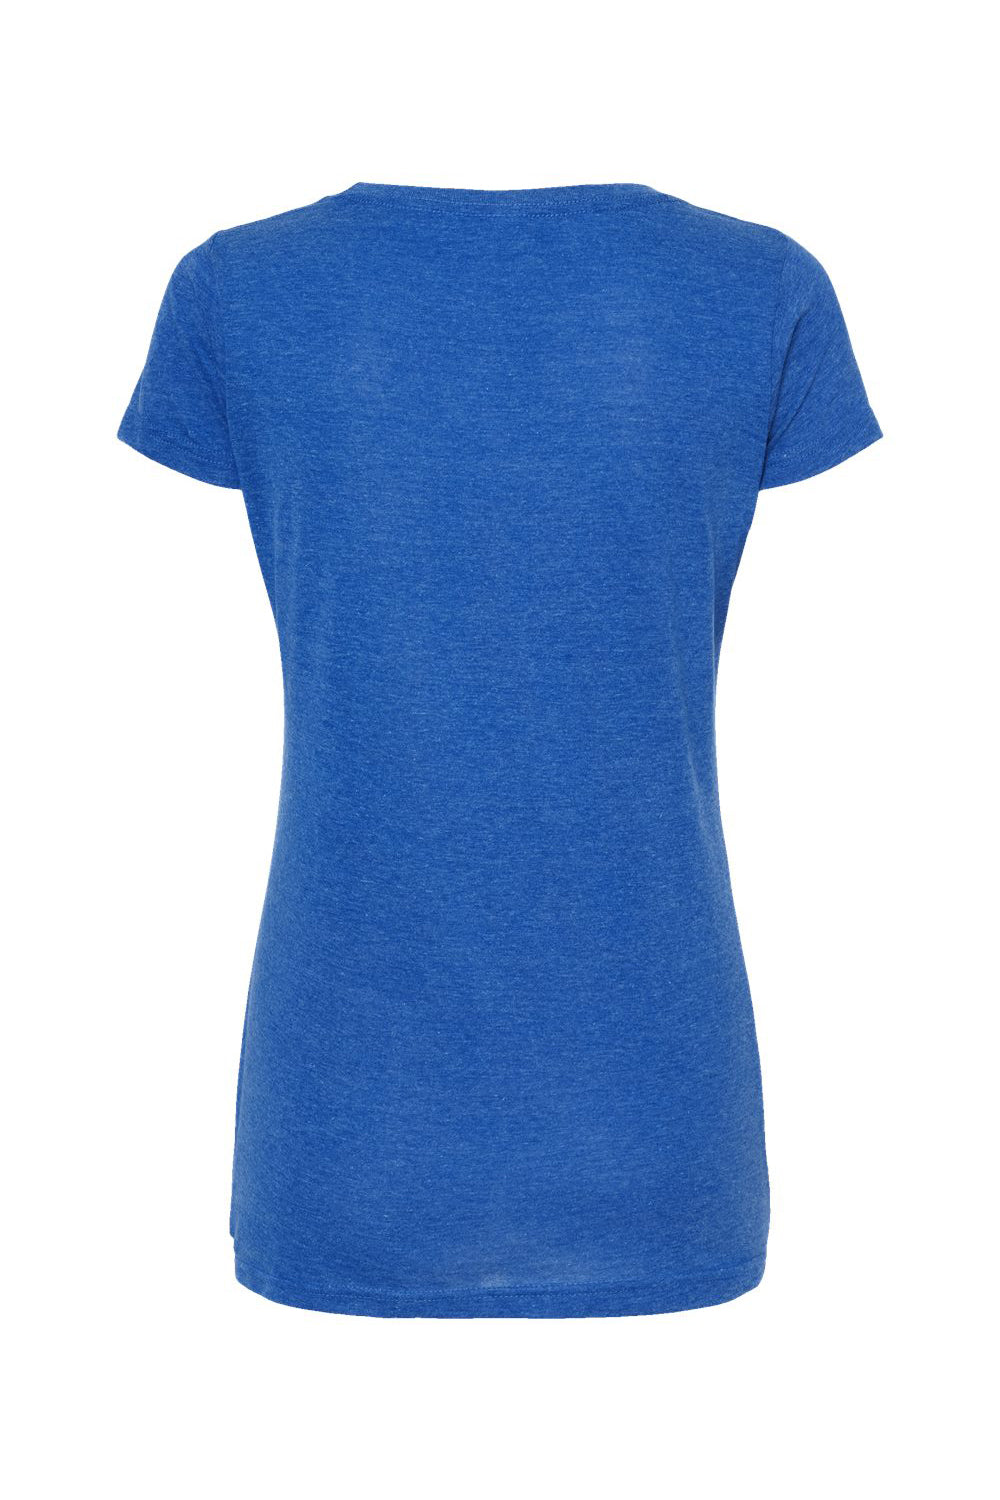 Tultex 243 Womens Poly-Rich Short Sleeve Scoop Neck T-Shirt Heather Royal Blue Flat Back